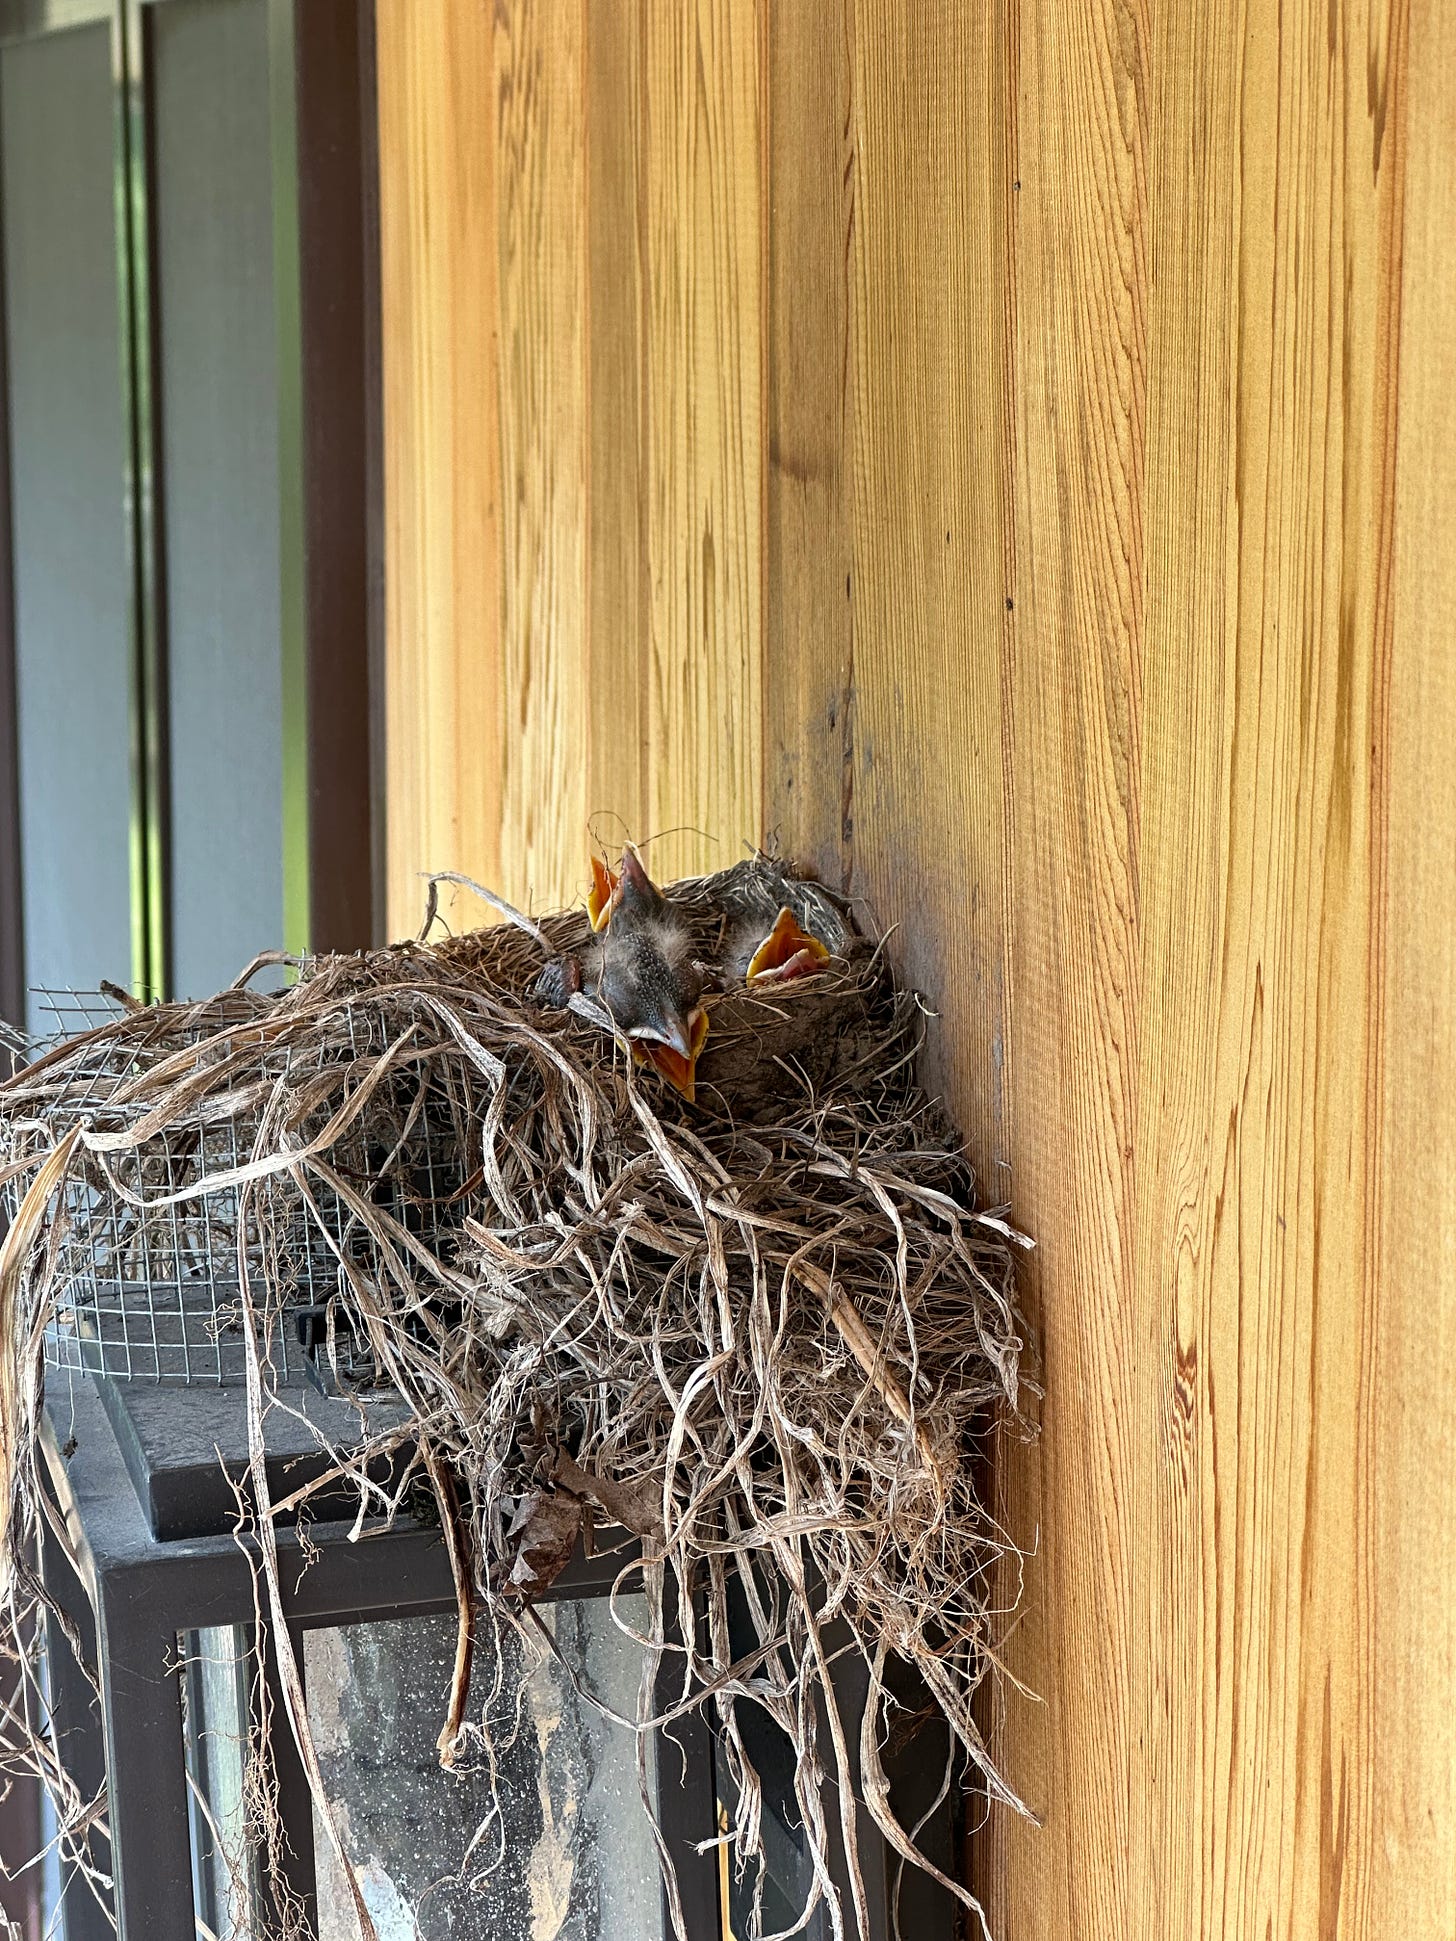 A nest with three baby birds